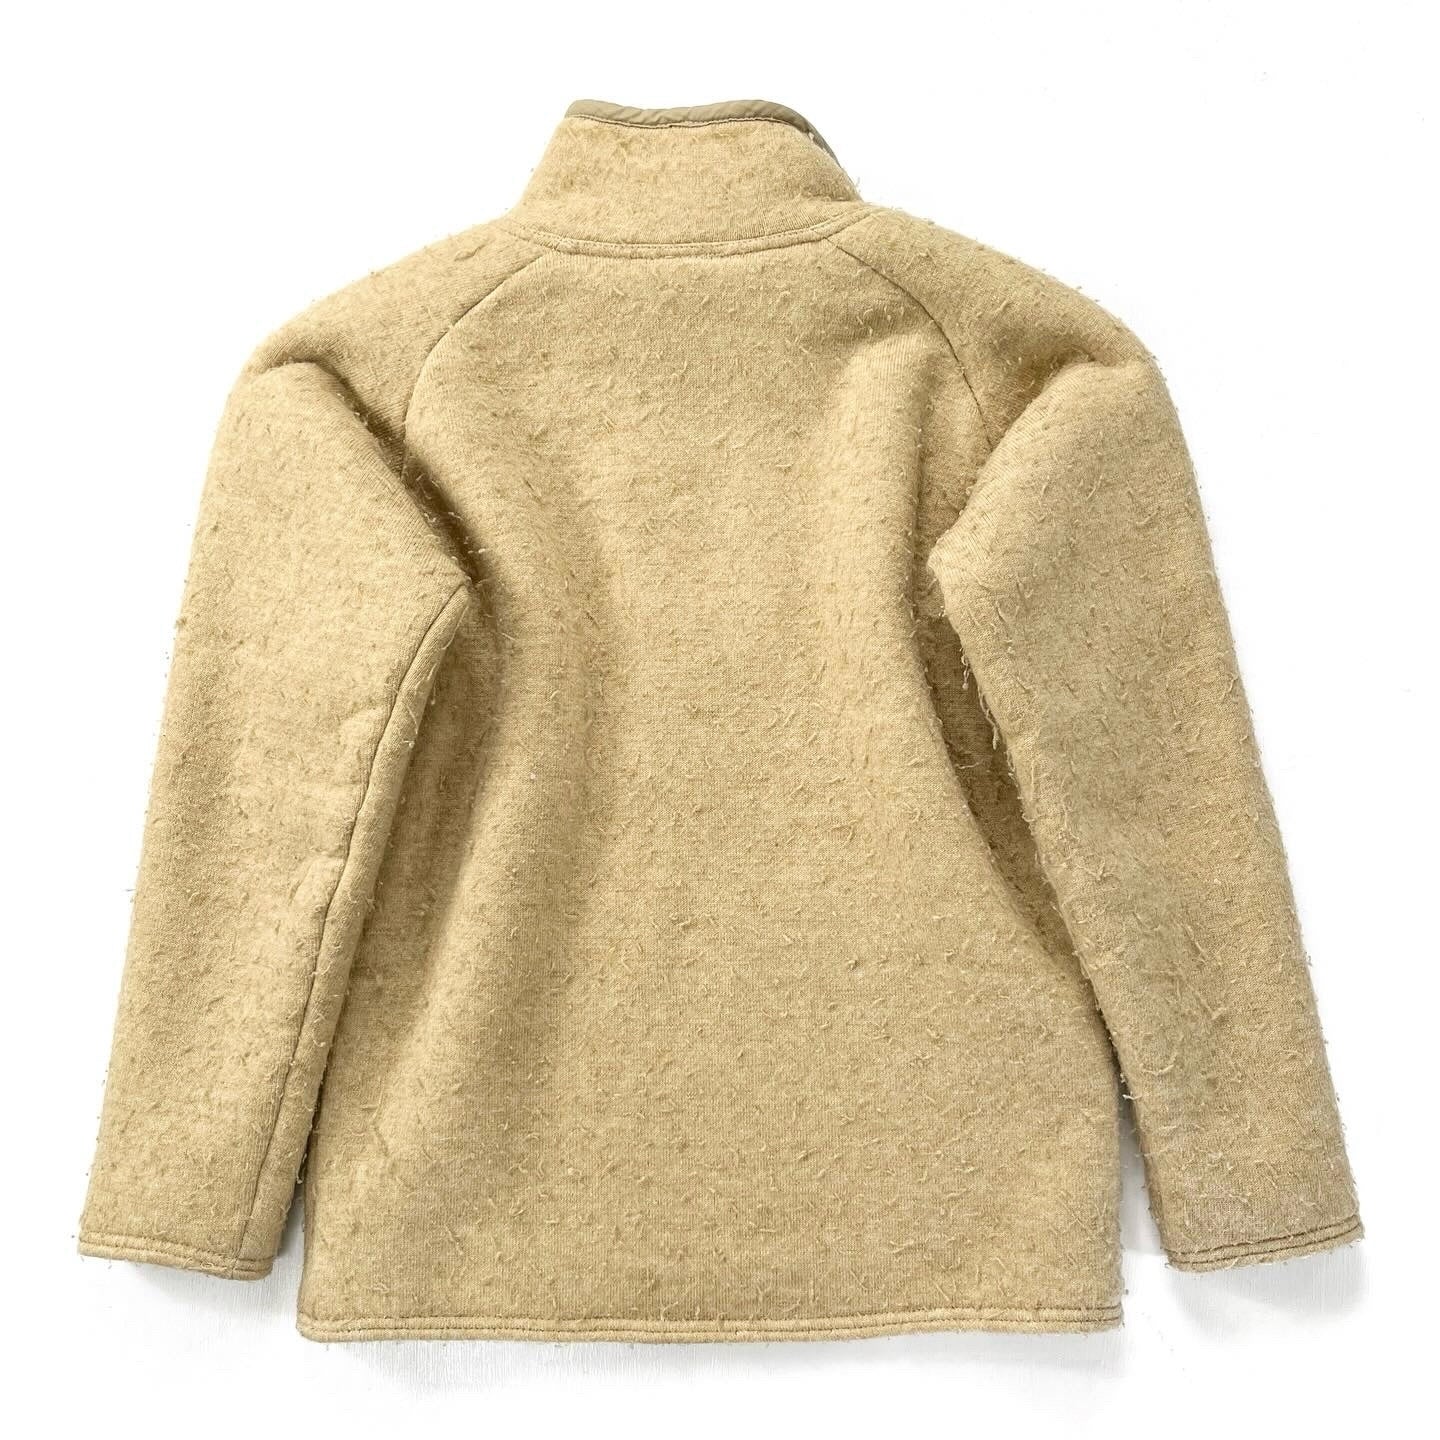 1970s Patagonia First Generation Half-Zip Pile Sweater, Tan (M)